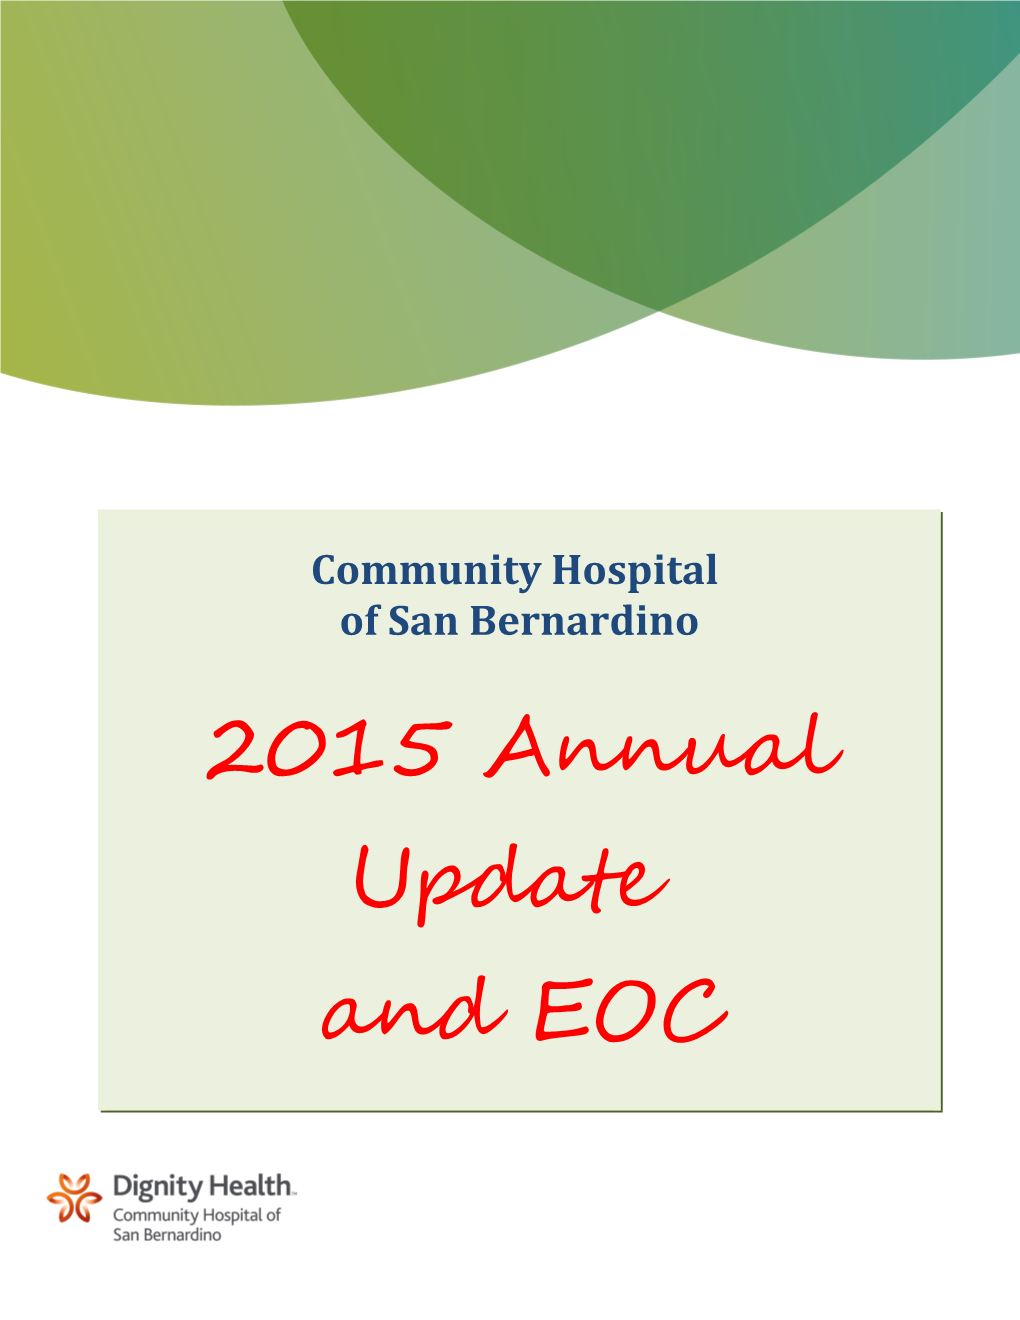 Community Hospital of San Bernardino Is a Non-Profit, Full Service, Acute Care Hospital